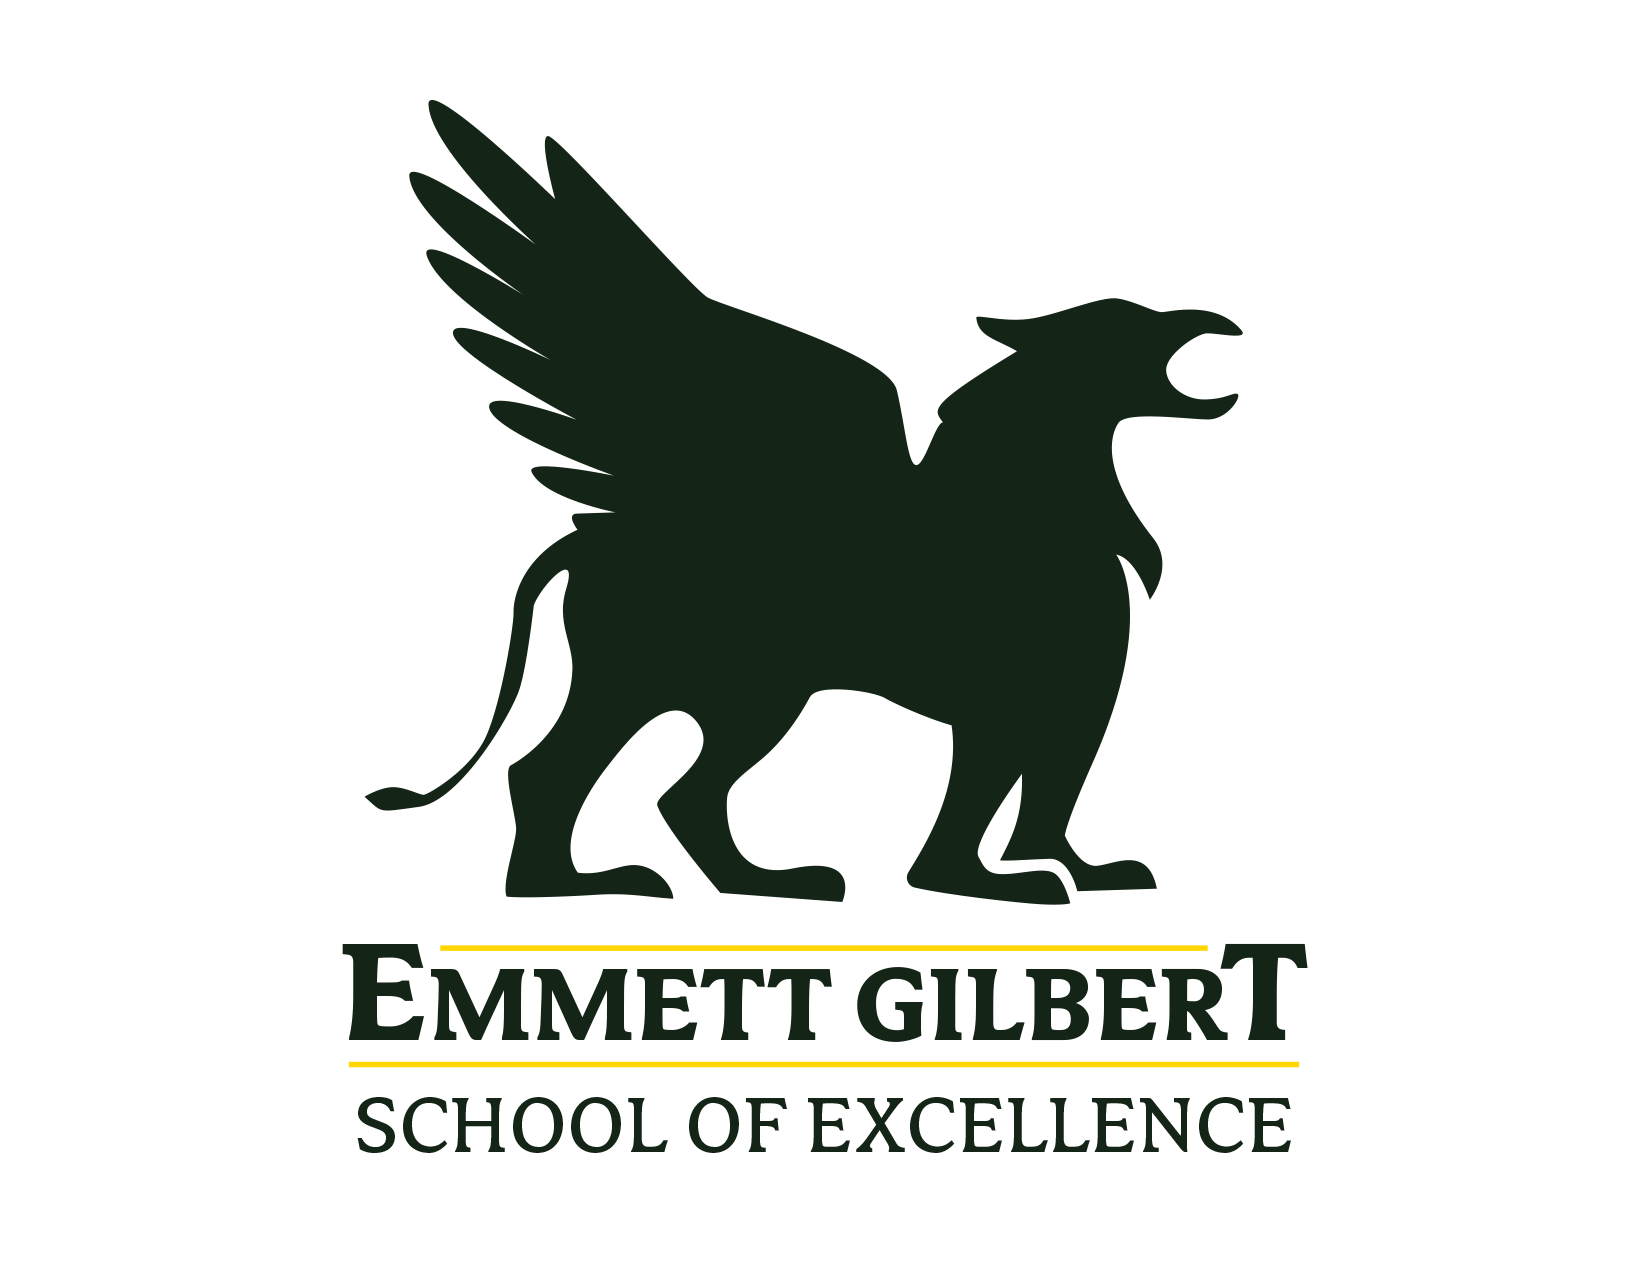 Gilbert Logo - Emmett Gilbert / Homepage